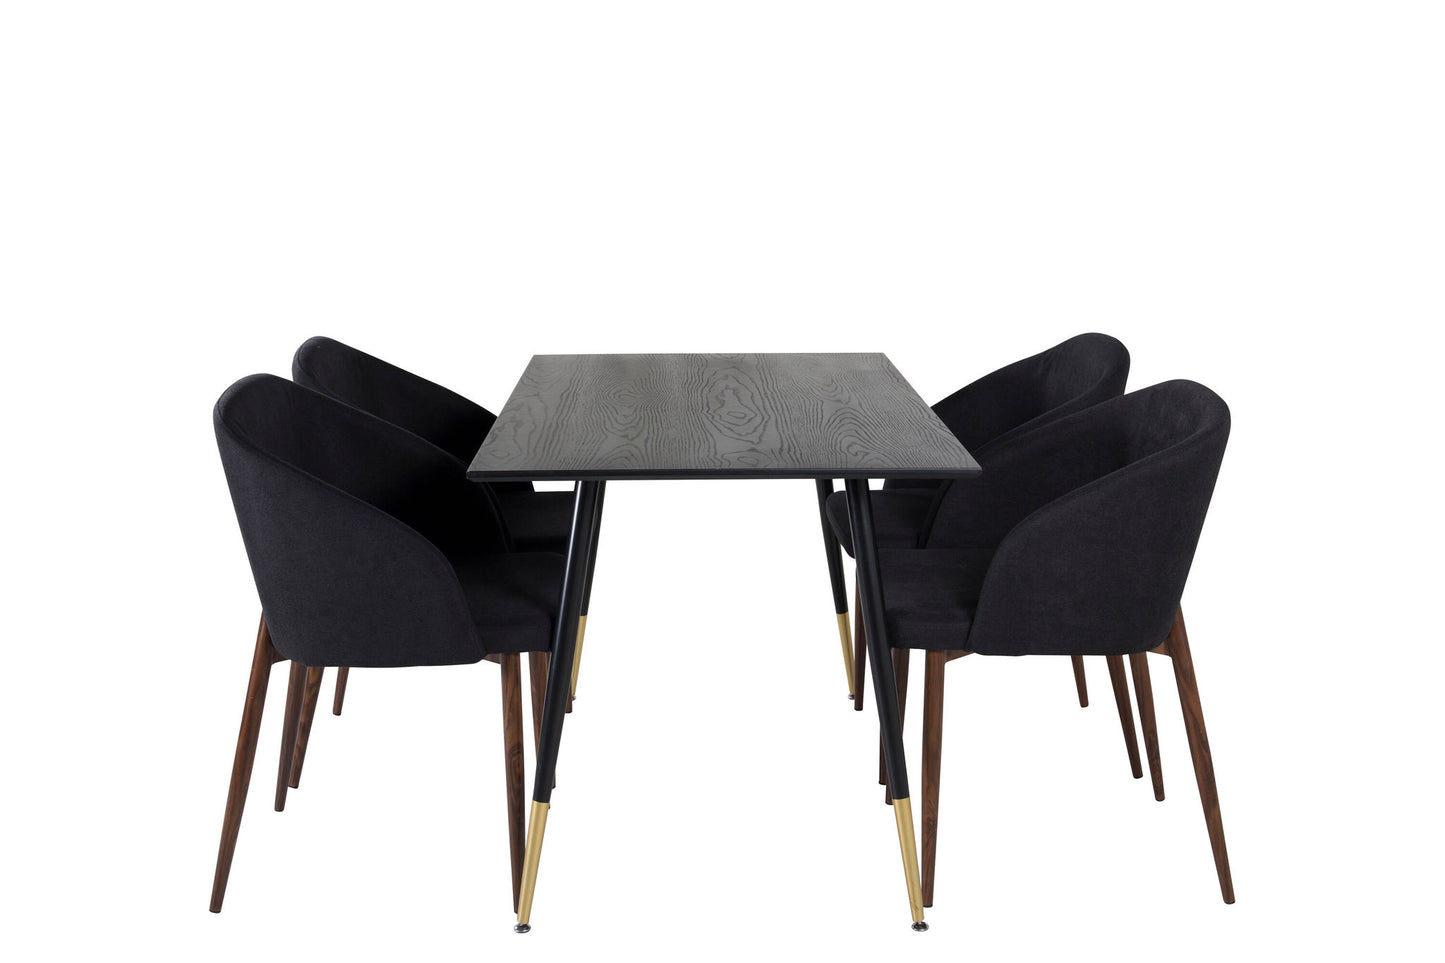 Dipp - Spisebord, 120 cm - Sort finér - Sorte ben m. Messing dipp+Arch Spisebordsstol - Valnød ben - Sort Stof